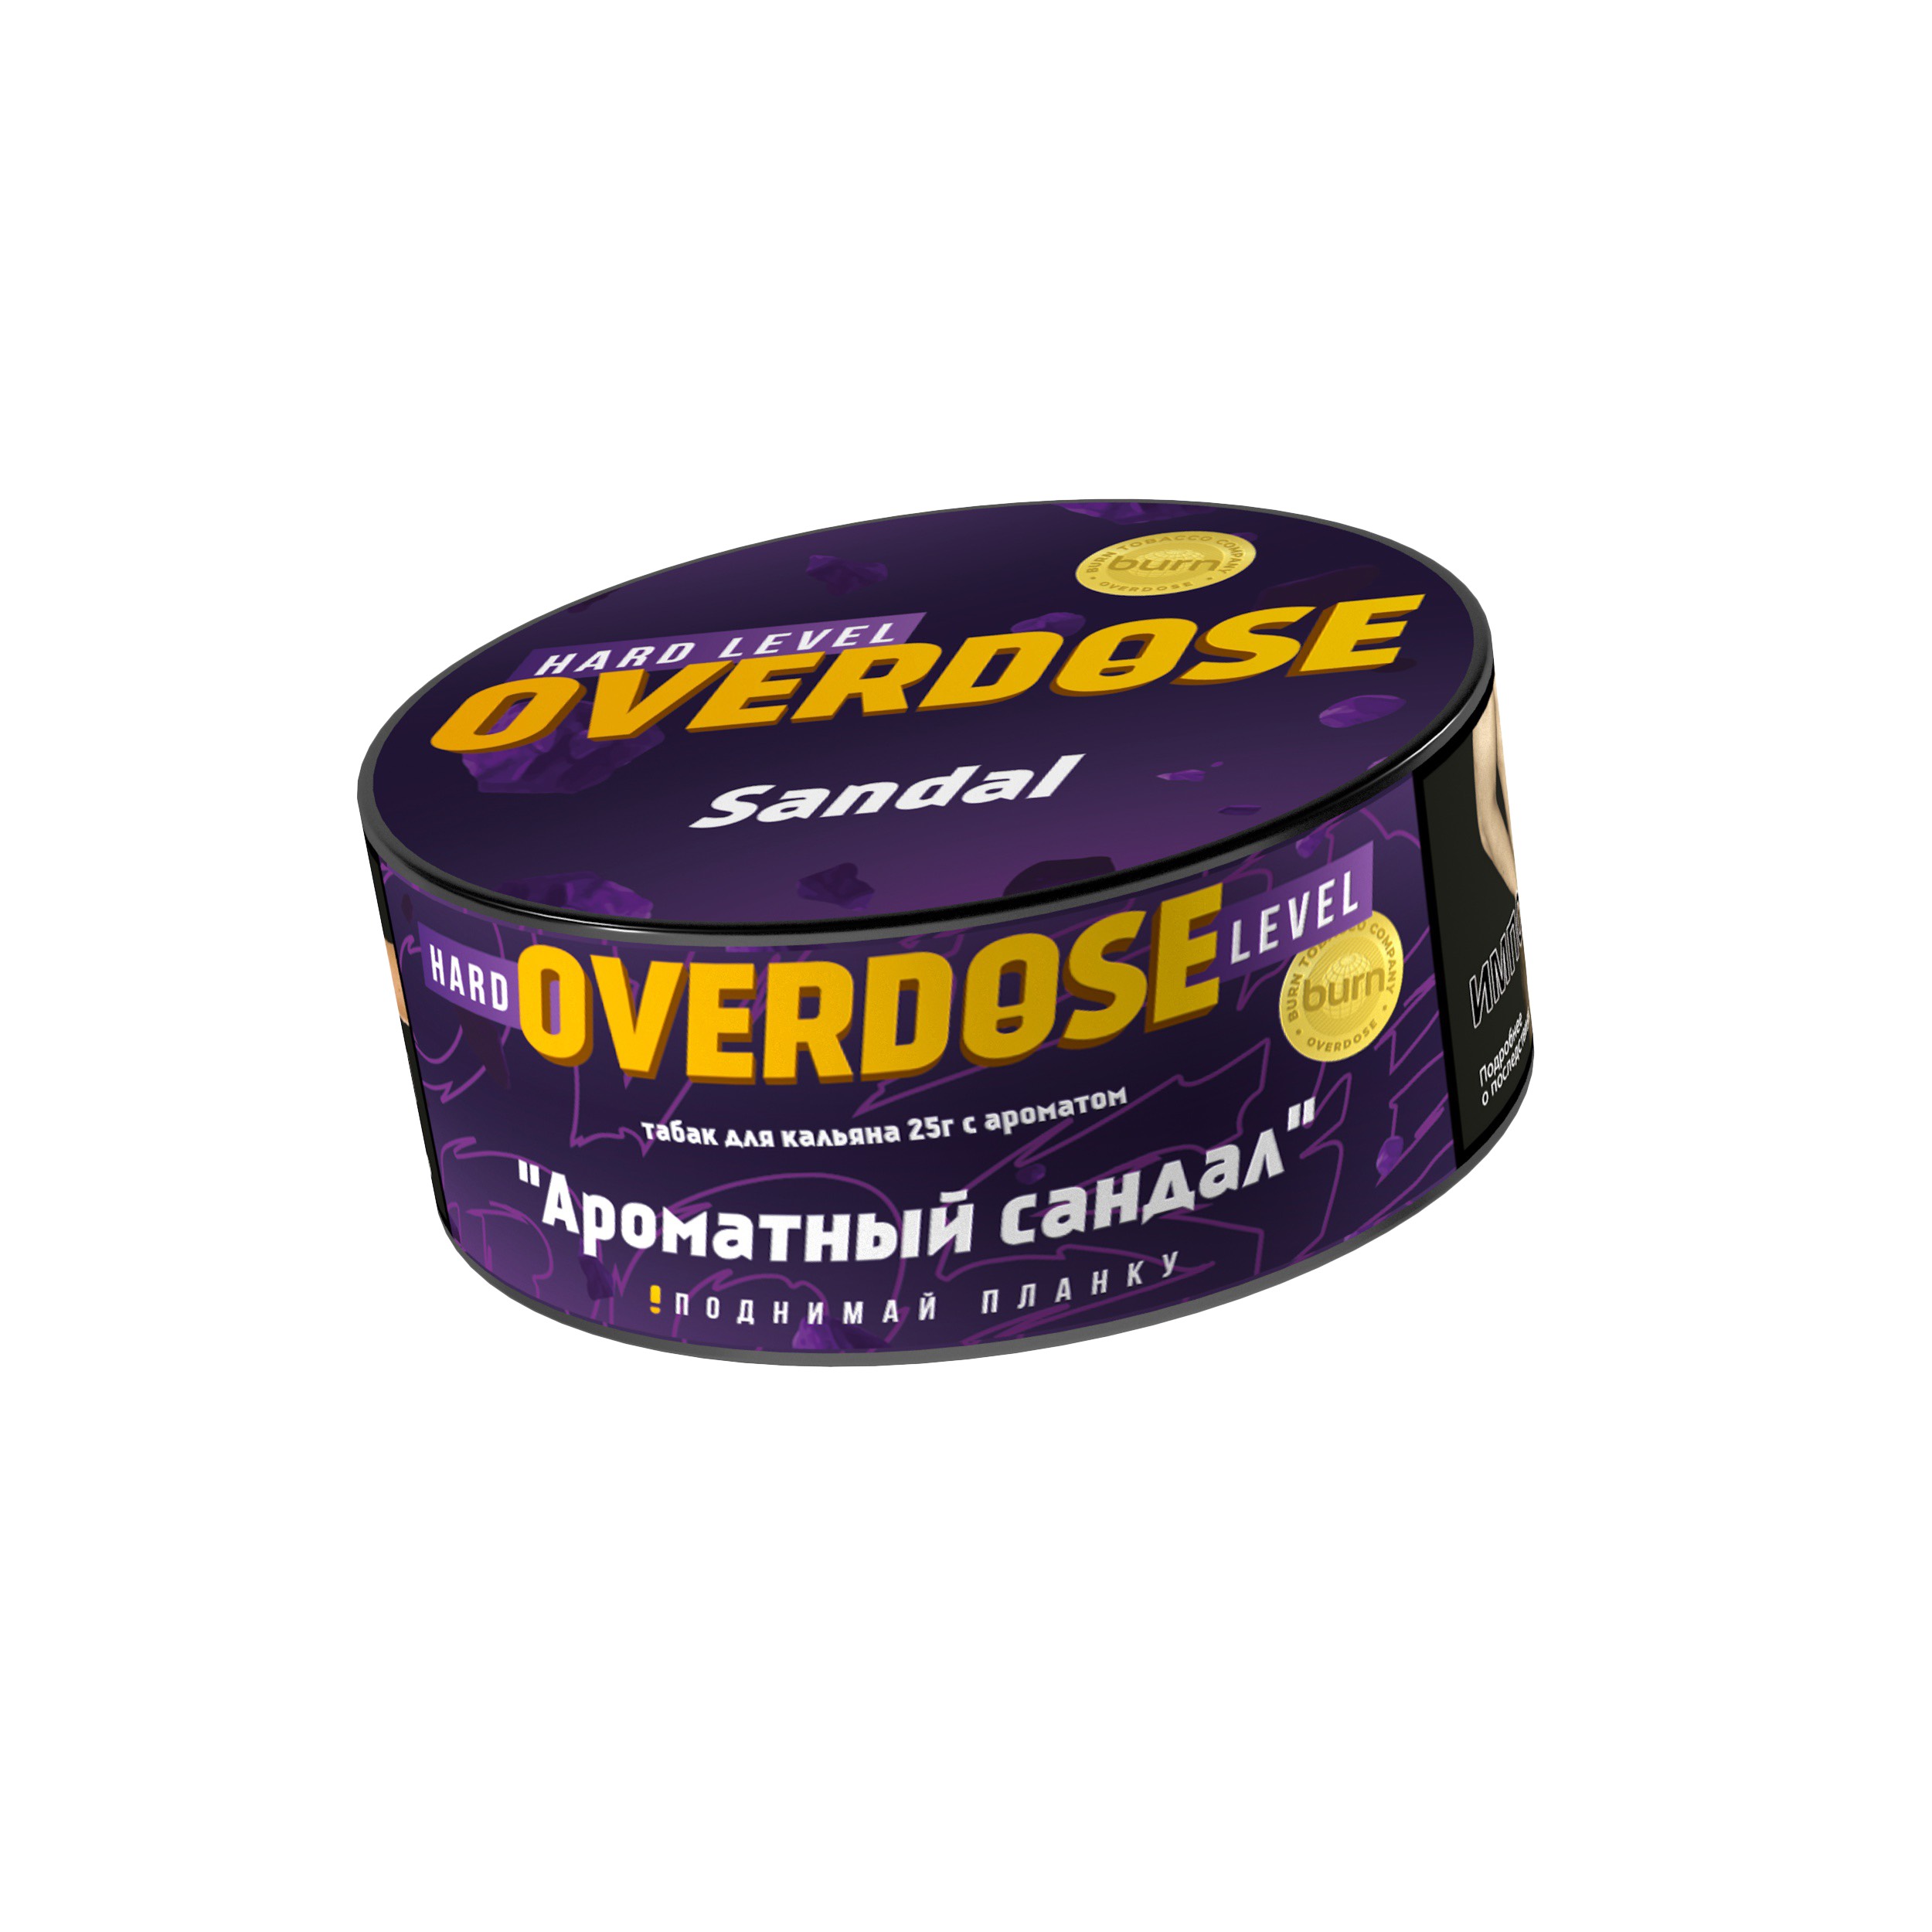 Табак - Overdose - Sandal - 25 g